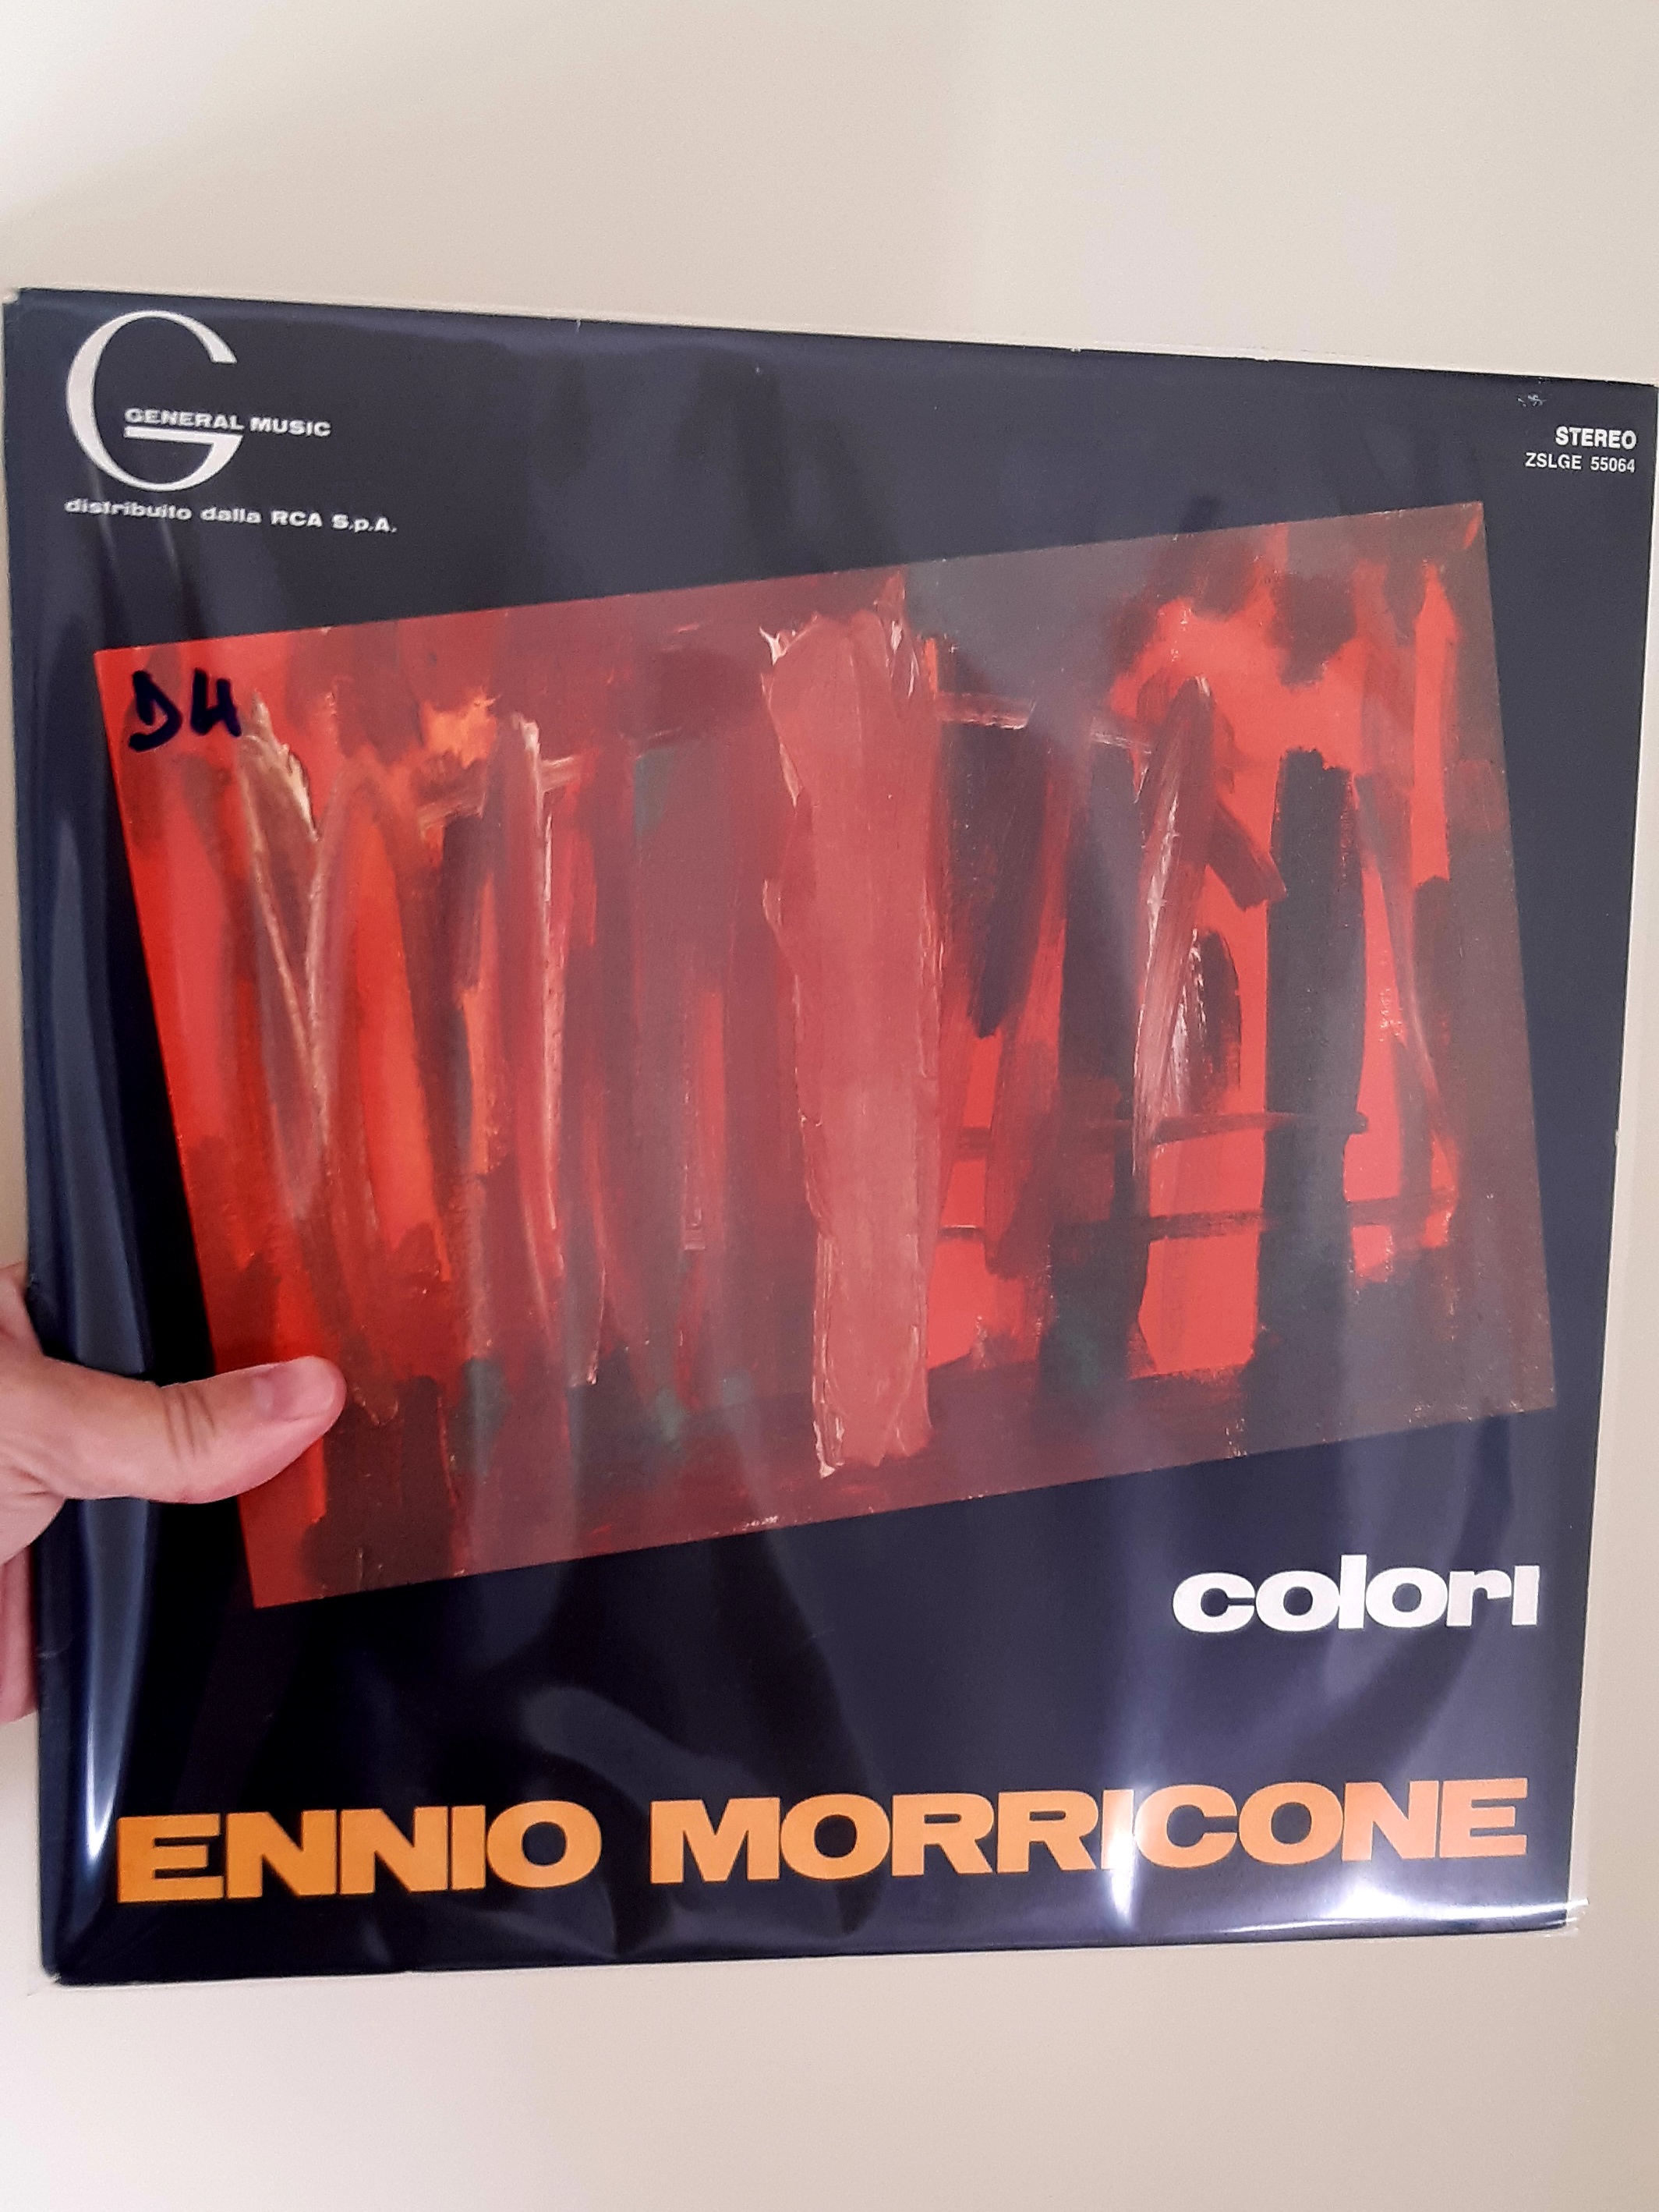 Ennio Morricone Colori vinyl LP.jpg